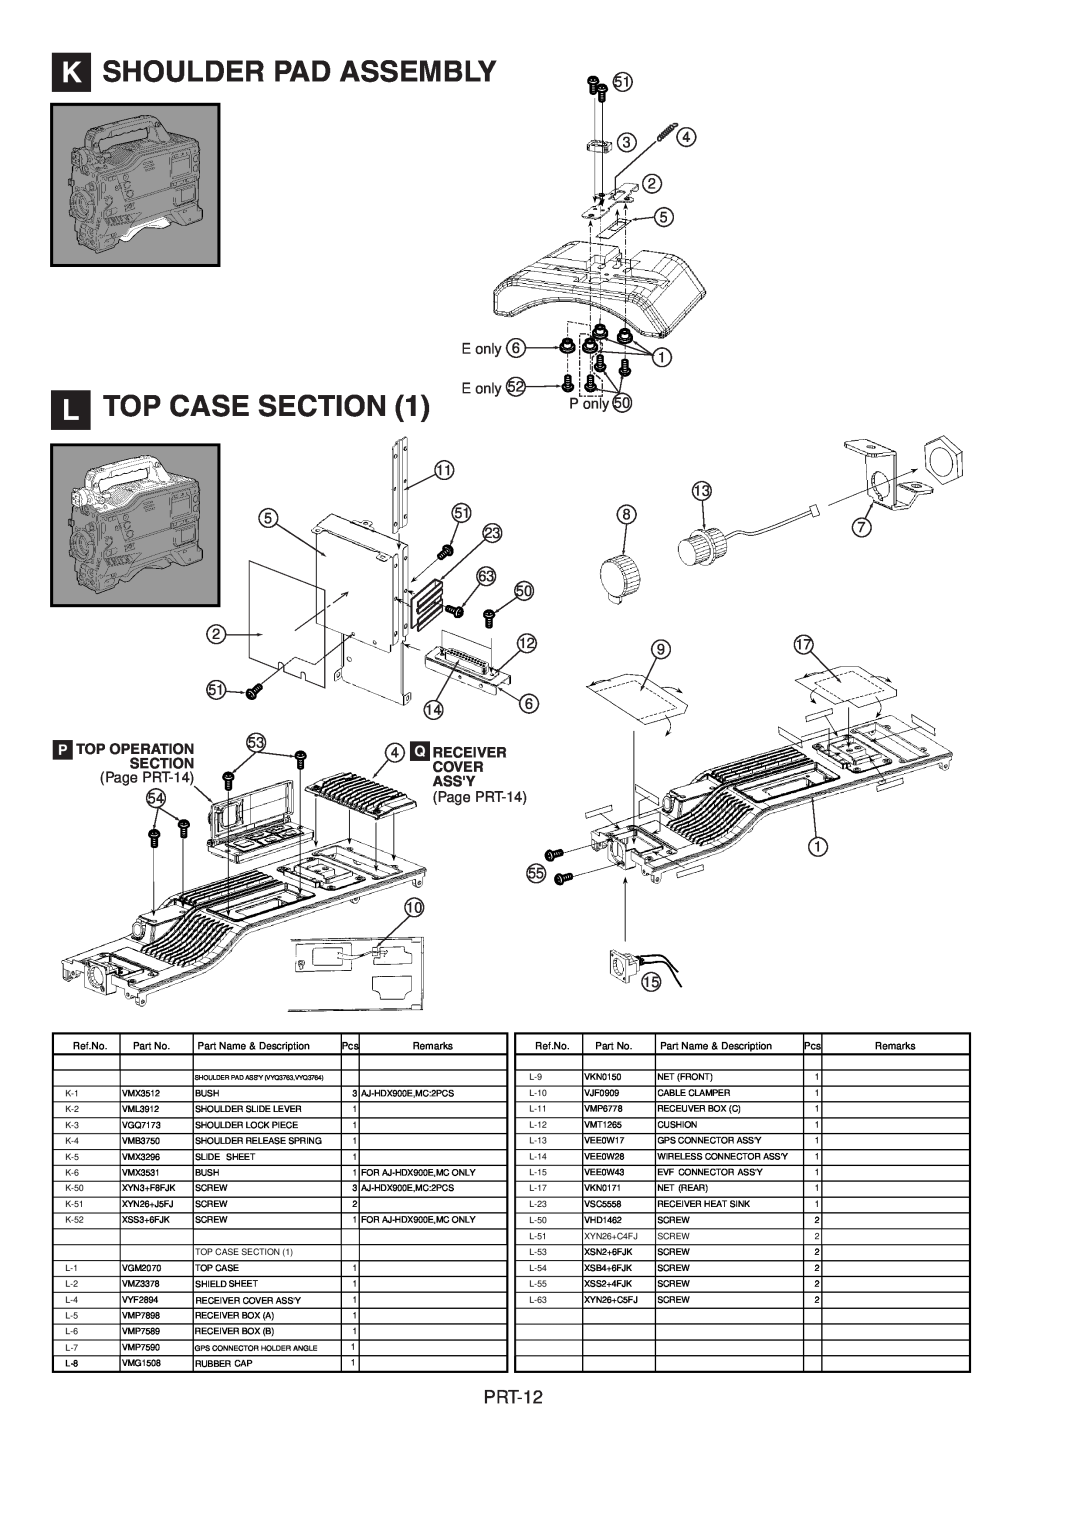 Panasonic AJ-HDX900MC K Shoulder Pad Assembly, L Top Case Section, PRT-12, E only, P only, P Top Operation, Q Receiver 